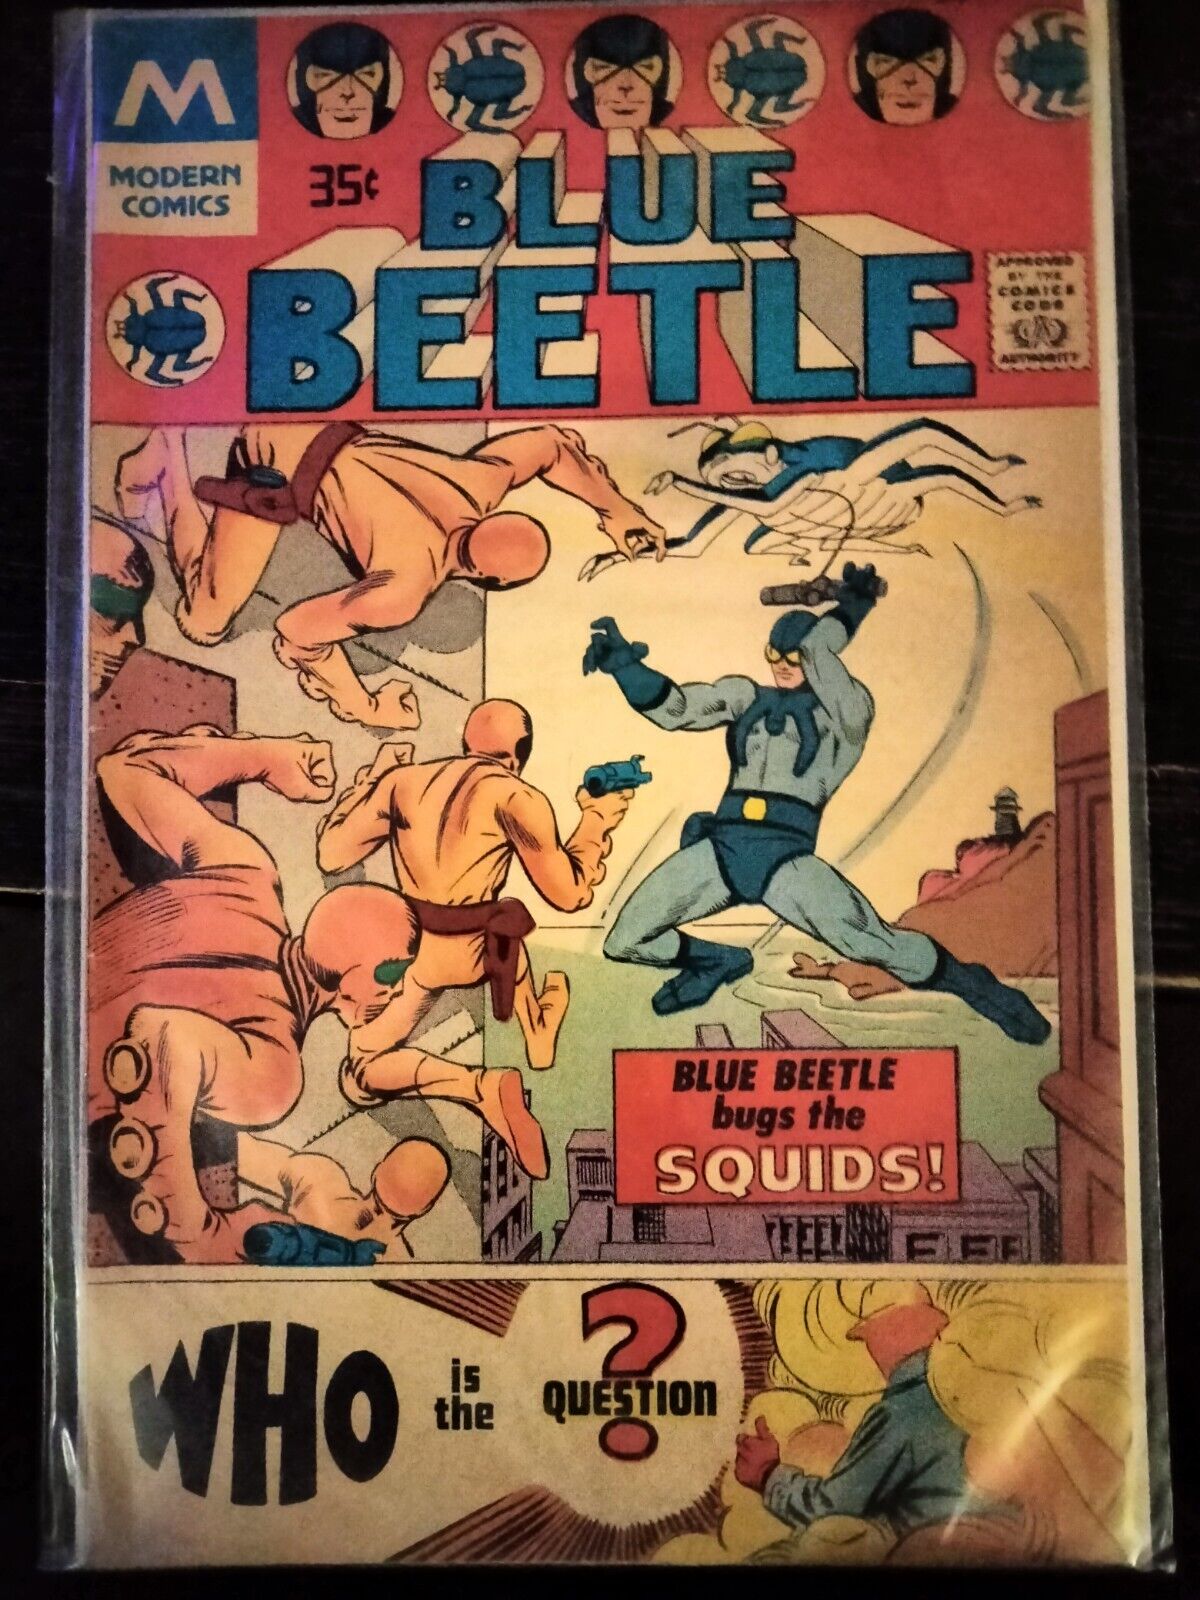 Blue Beetle #1 Reprint, 1977, Modern Comics, (Original was 1967, by Charlton)